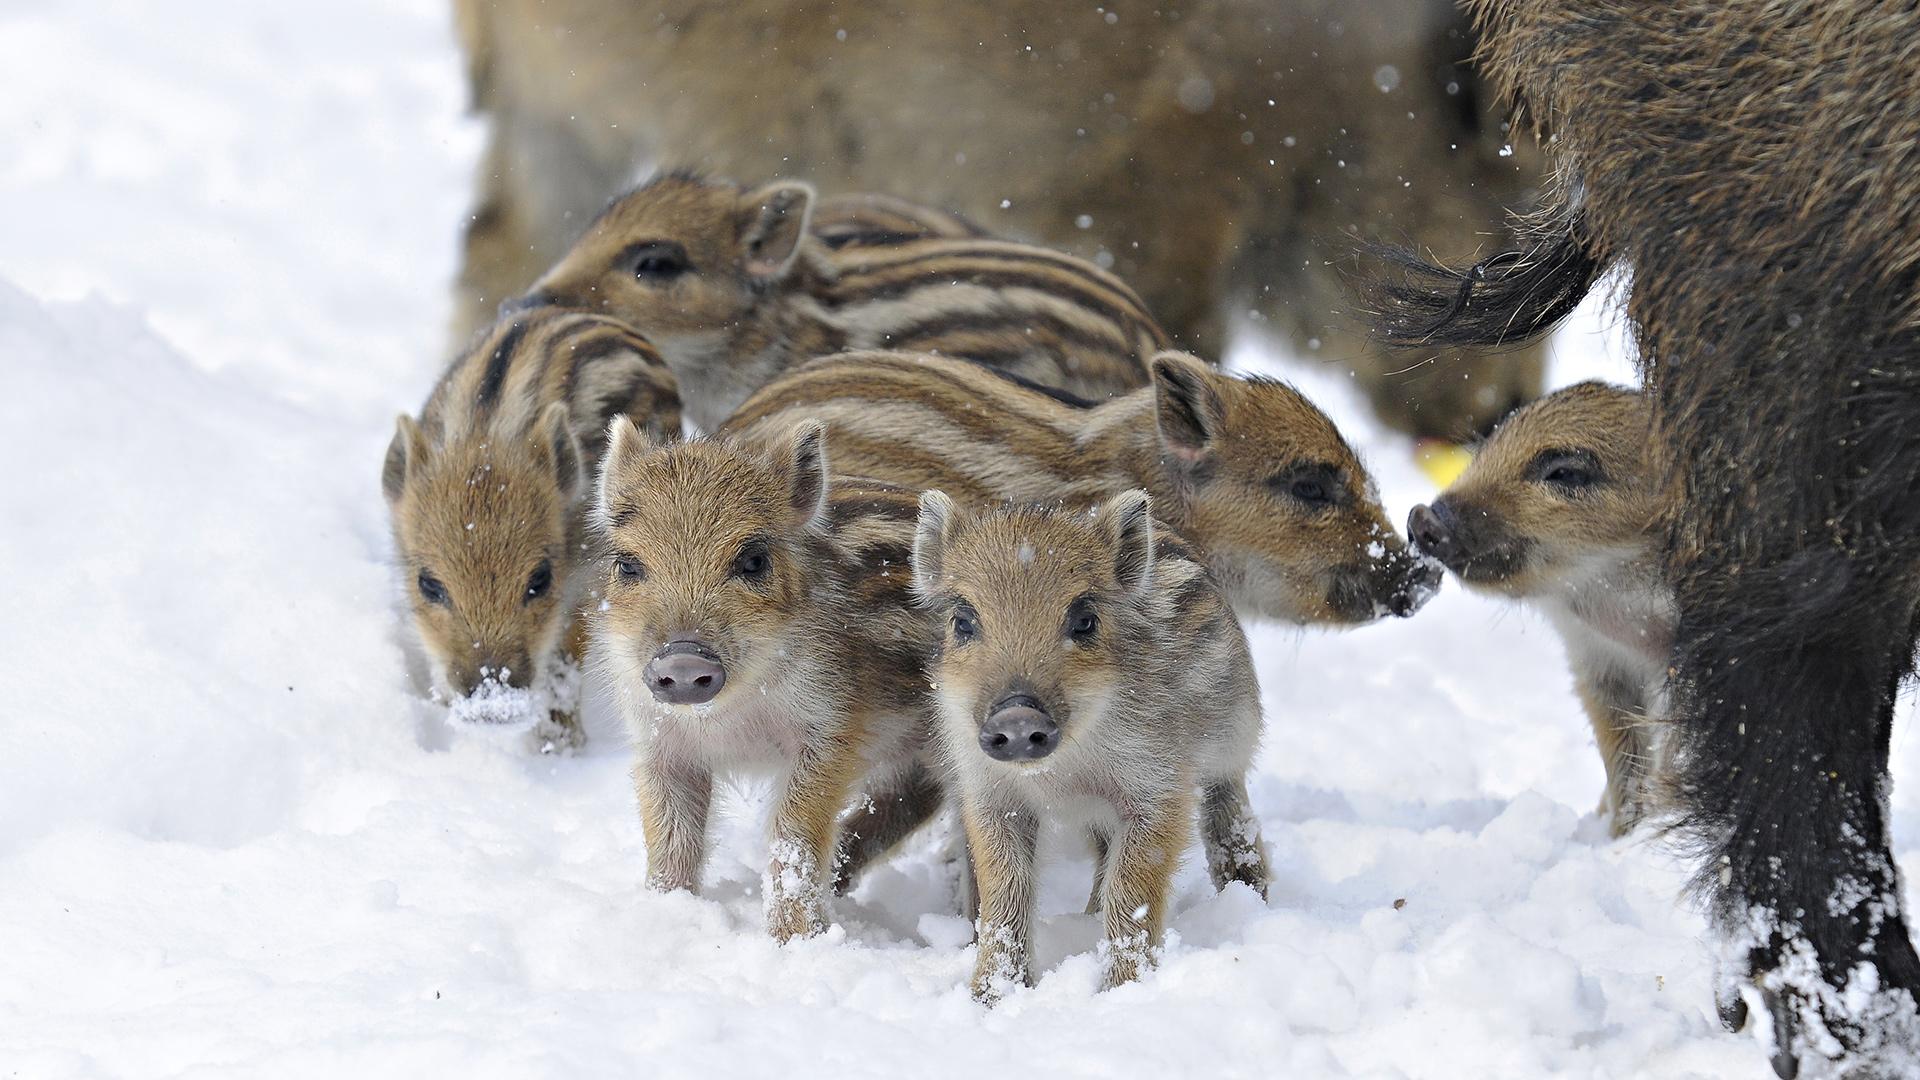 Piglets - small boars